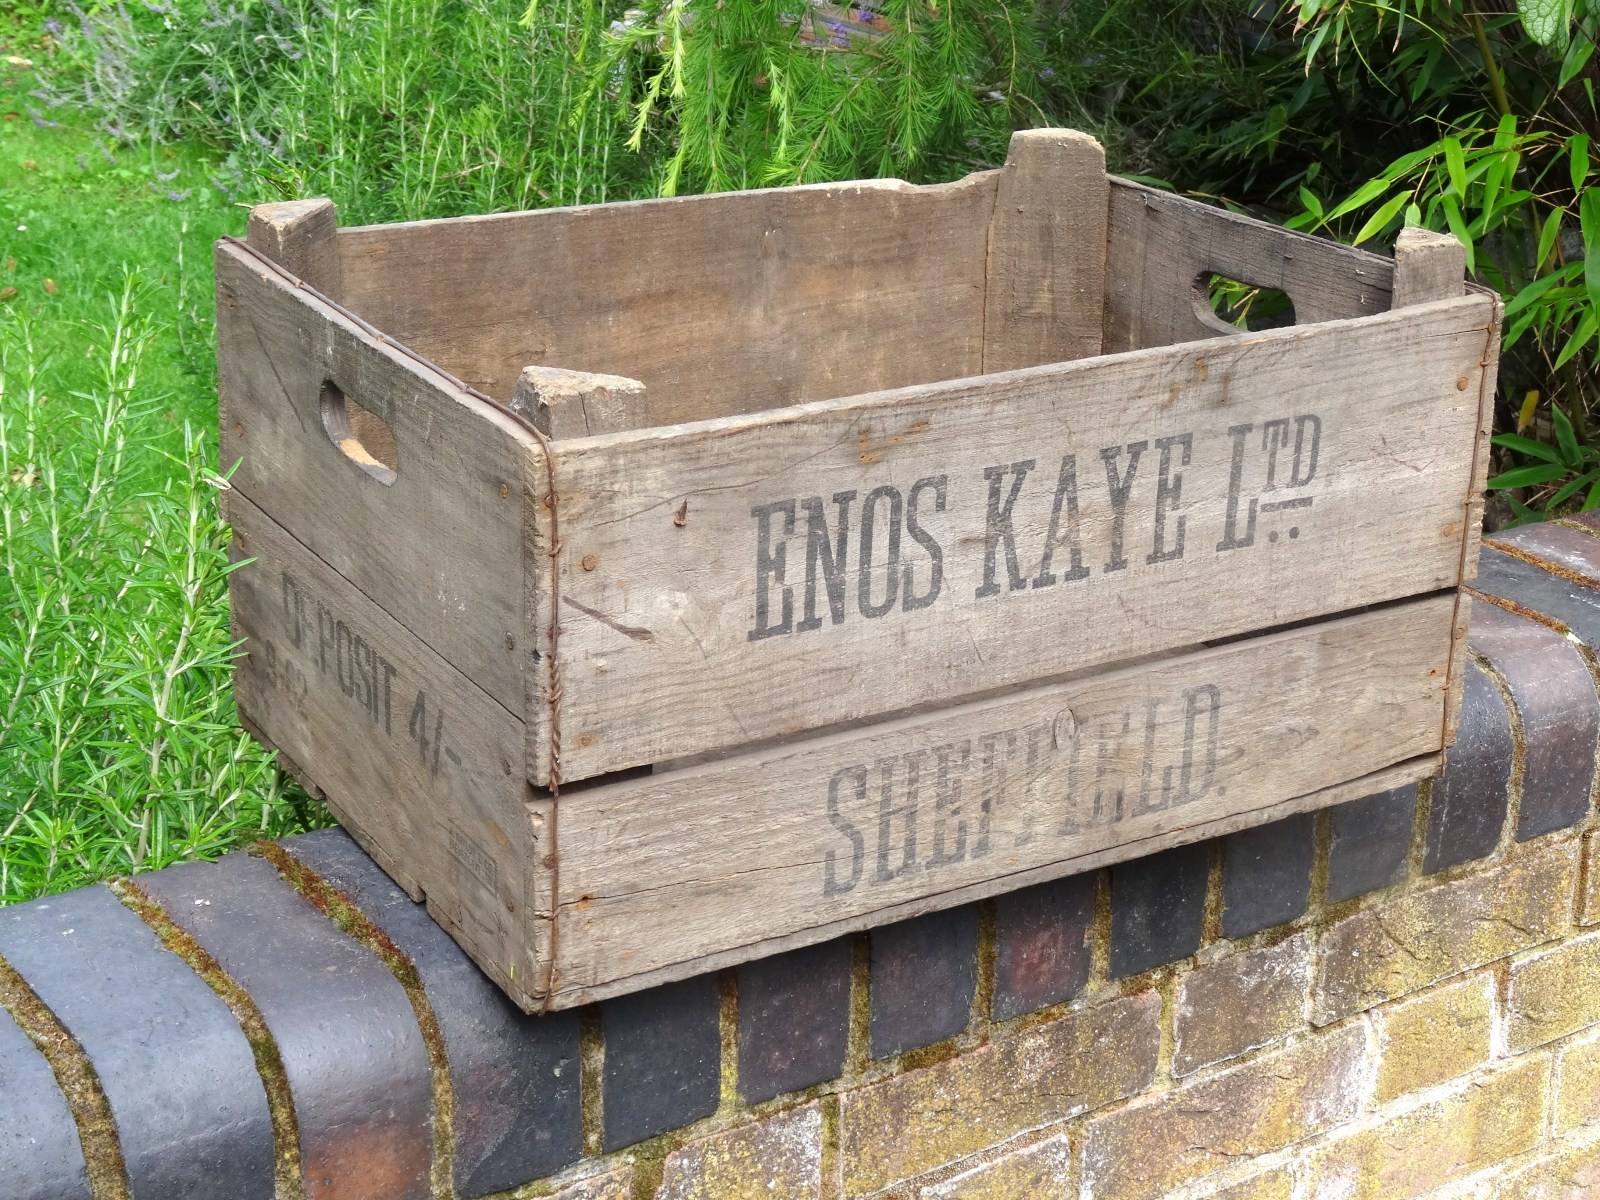 Enos Kaye Ltd. Bushel Crate